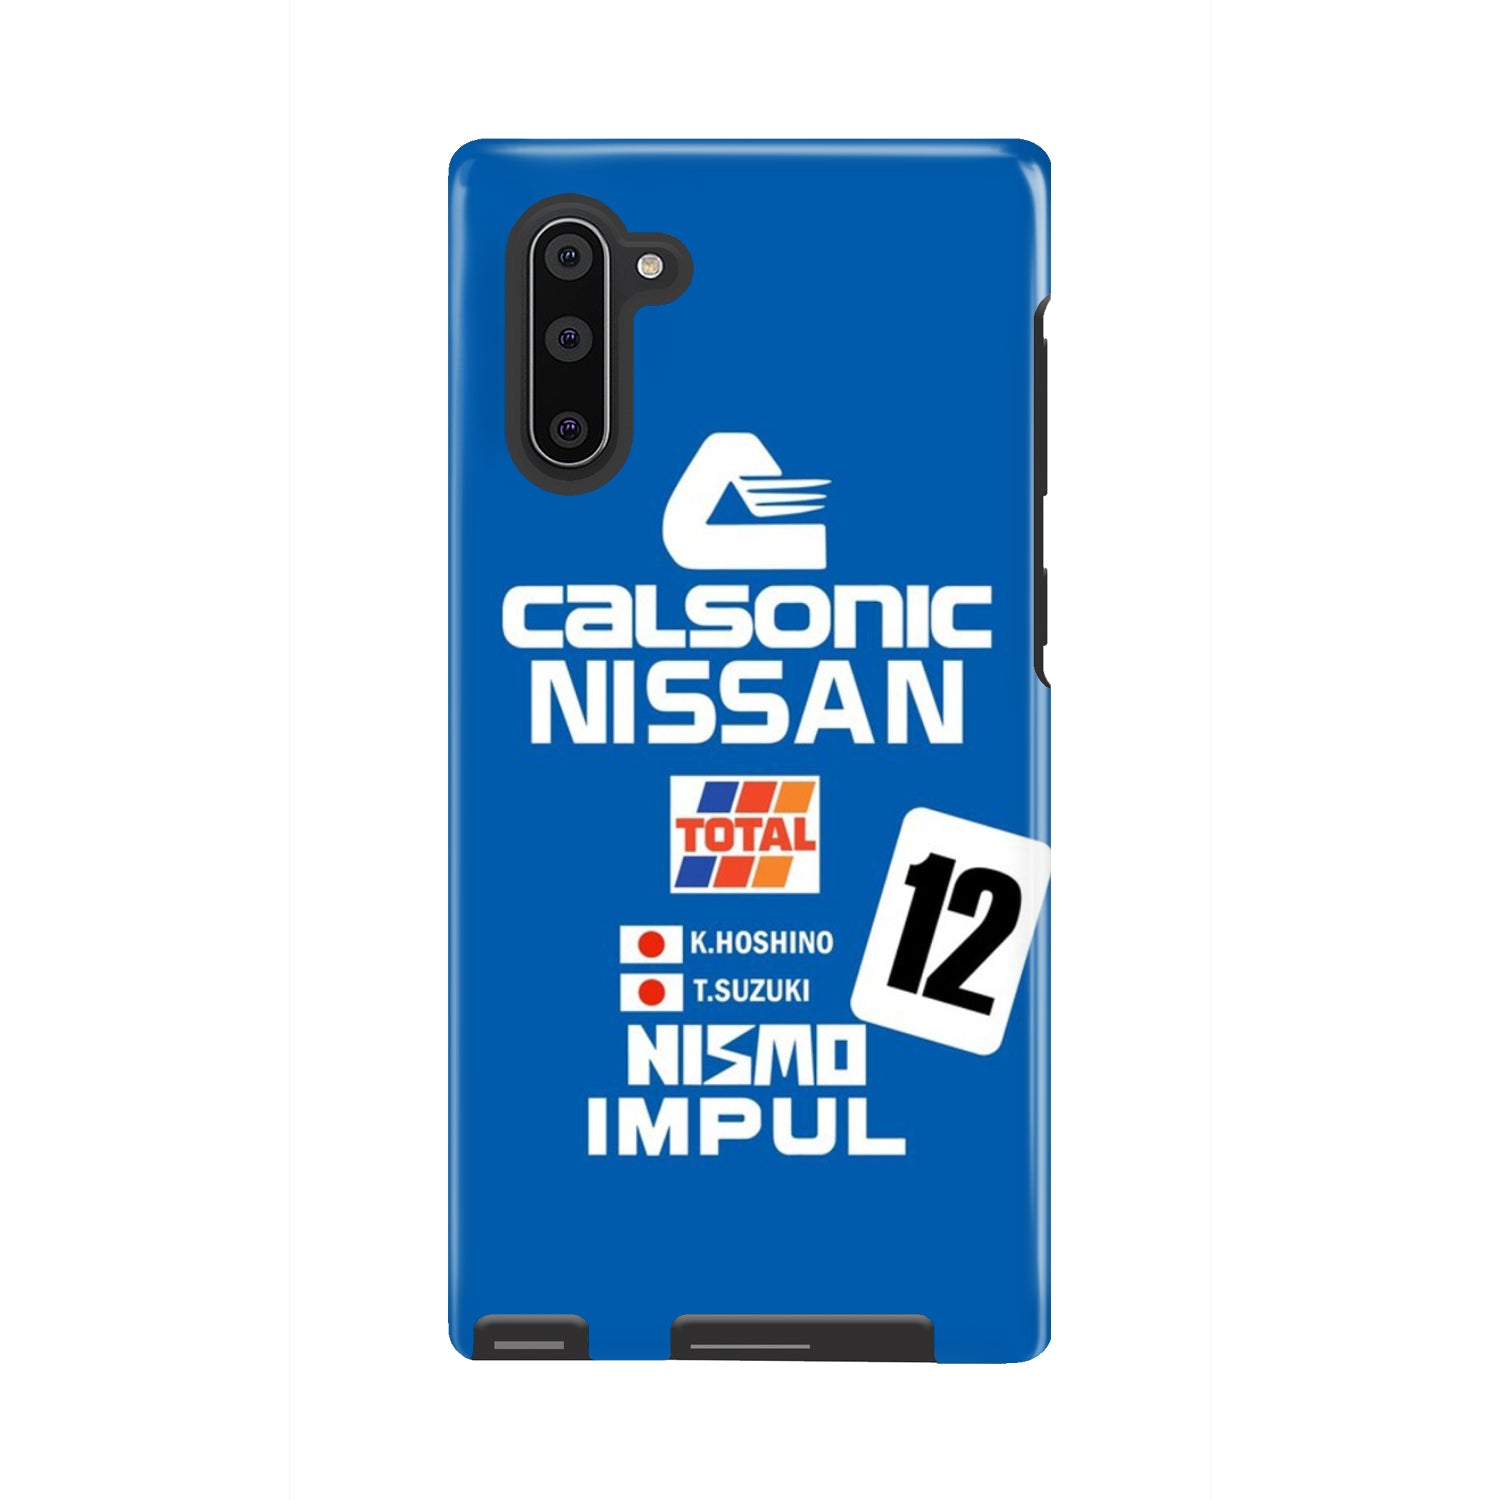 Nissan Calsonic Phone Case